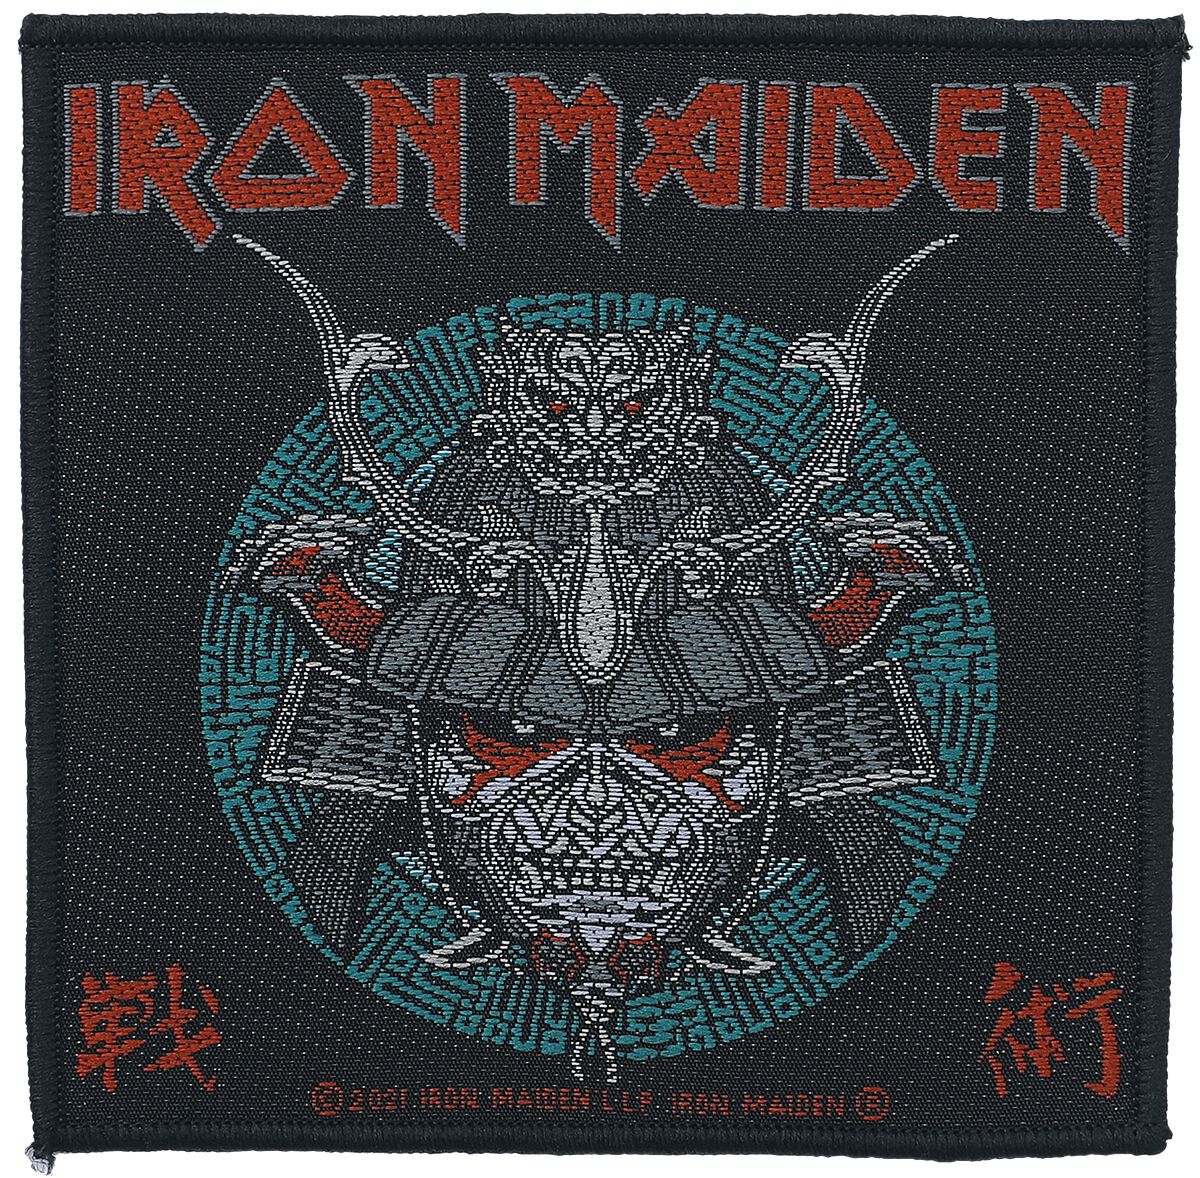 Iron Maiden - Senjutsu Samurai Eddie - Patch - multicolor